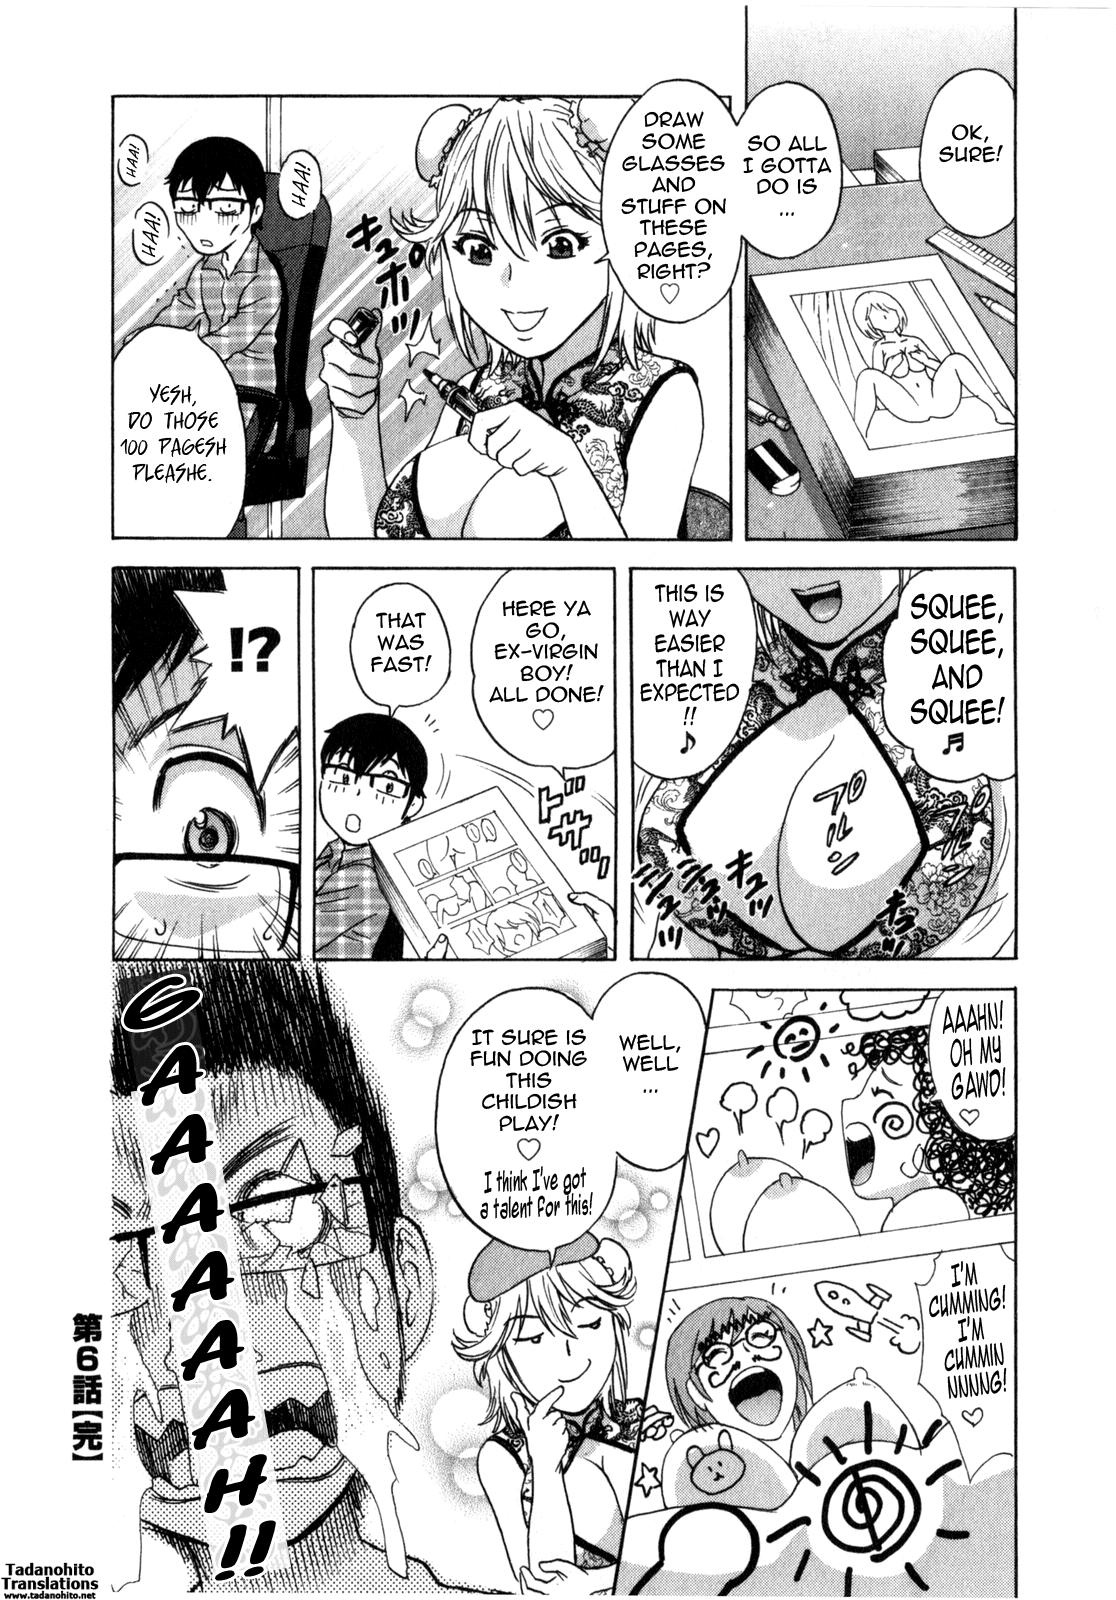 [Hidemaru] Life with Married Women Just Like a Manga 3 - Ch. 1-7 [English] {Tadanohito} 124